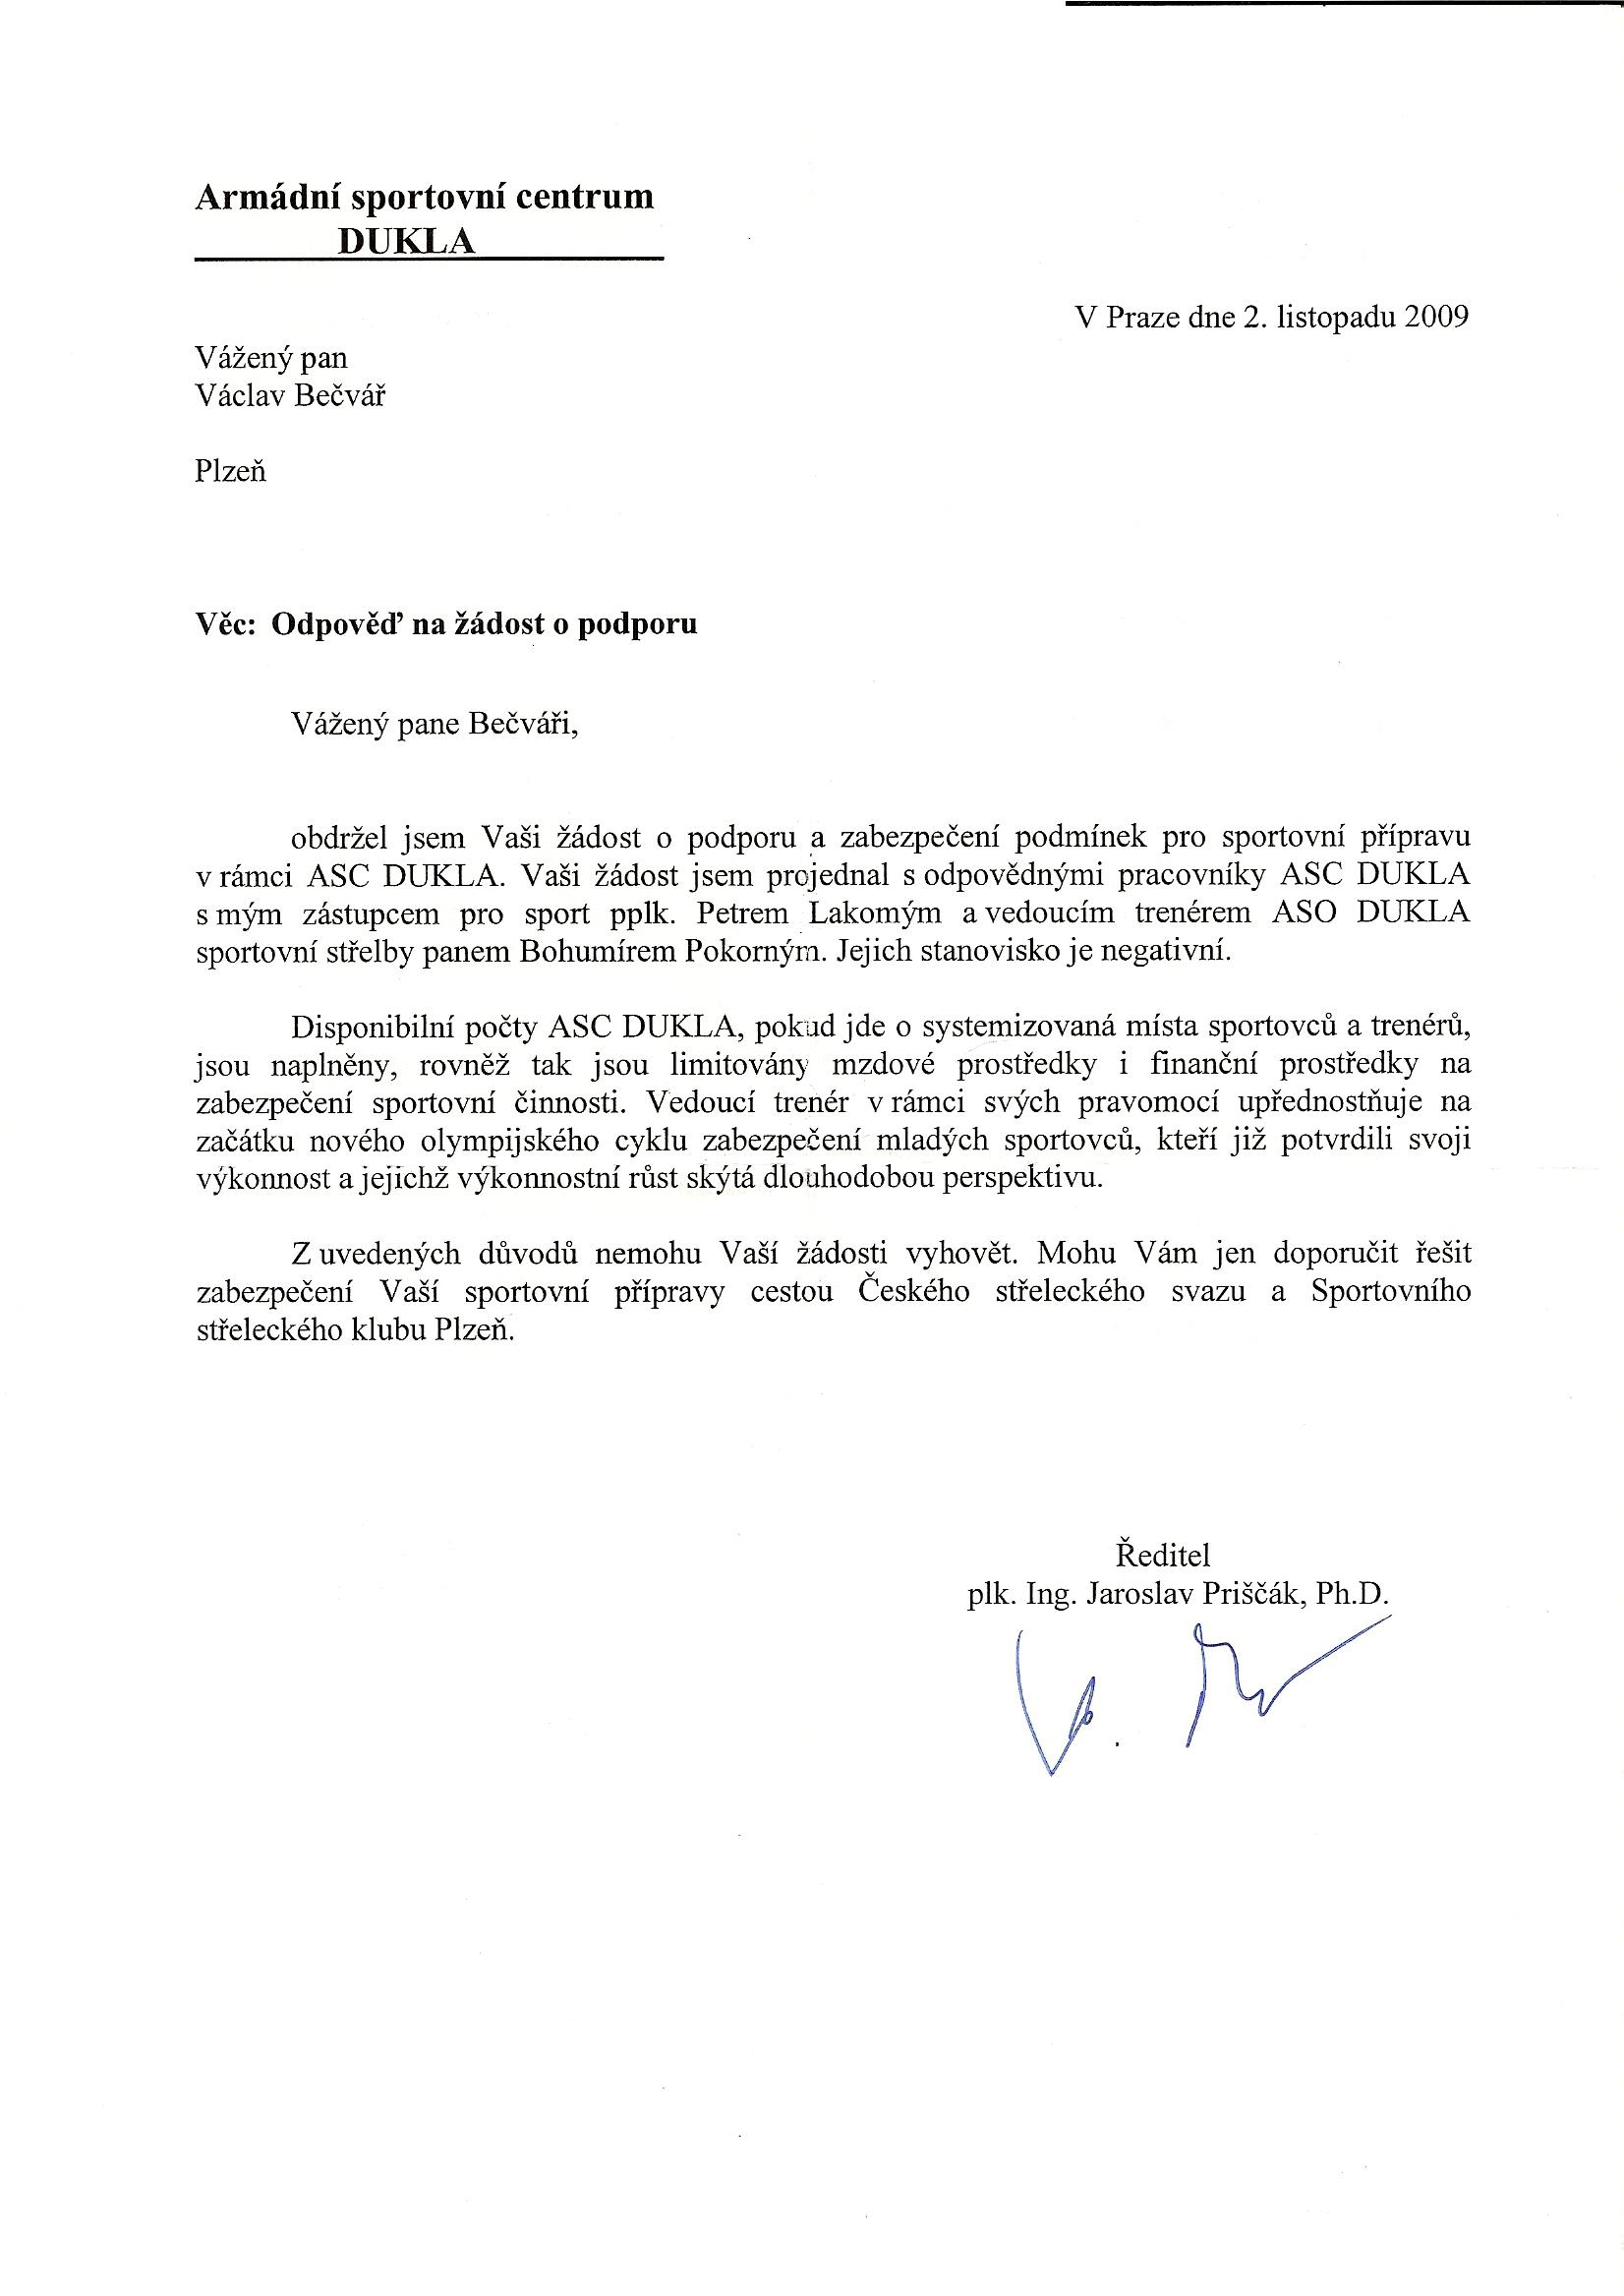 Odpověd na žádost o podporu ASC Dukla Praha 09